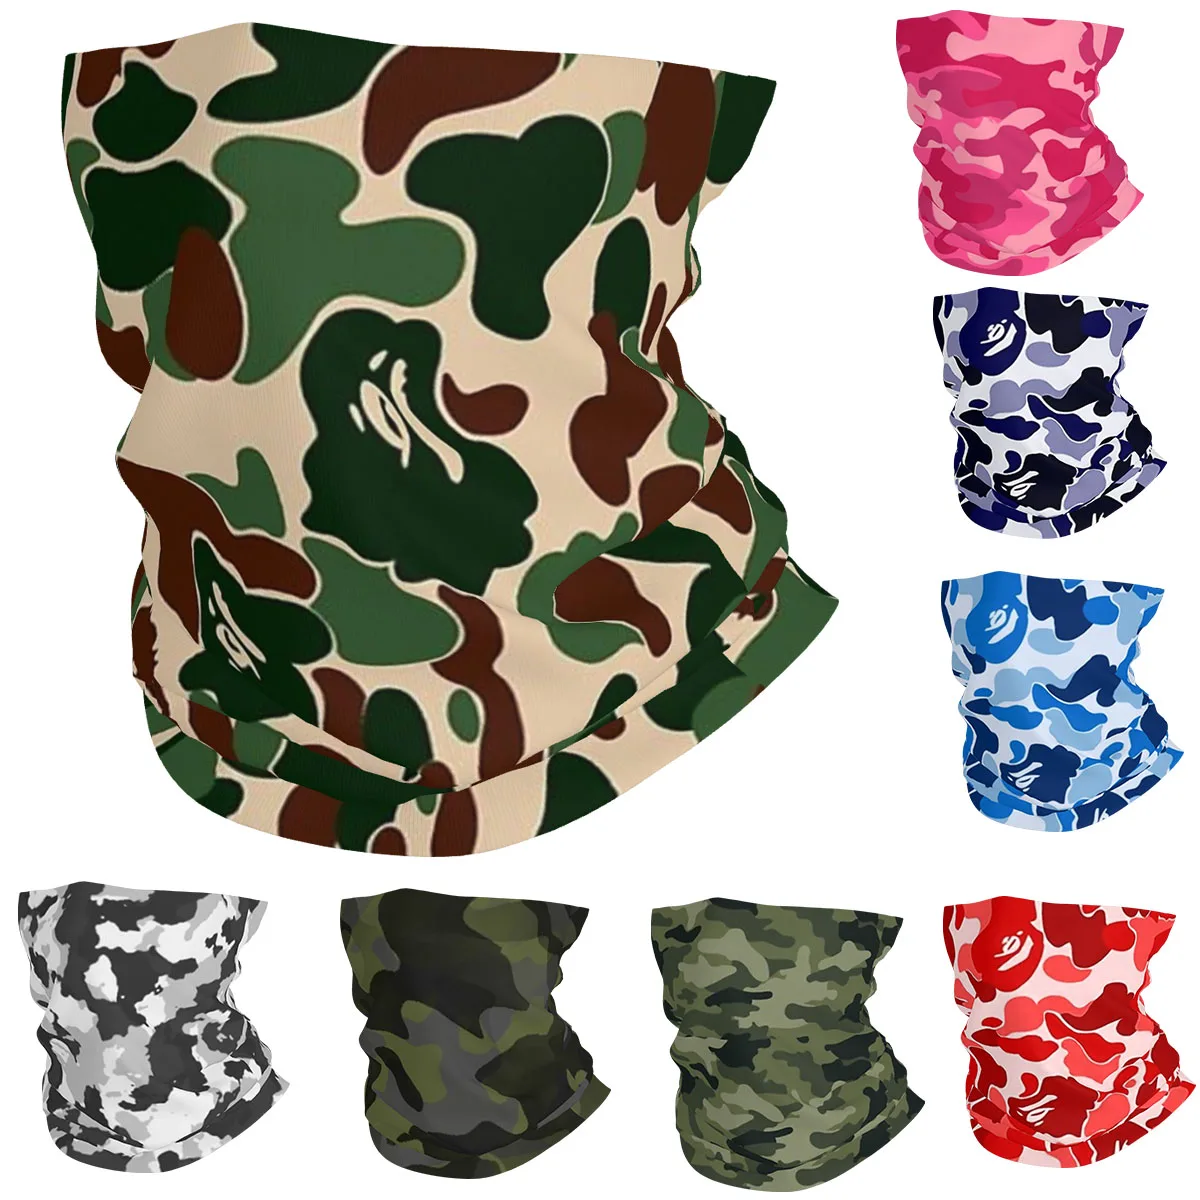 

Military Camouflage Bandana Neck Gaiter Printed War Camo Army Mask Scarf Multi-use Face Mask Riding Men Women Adult